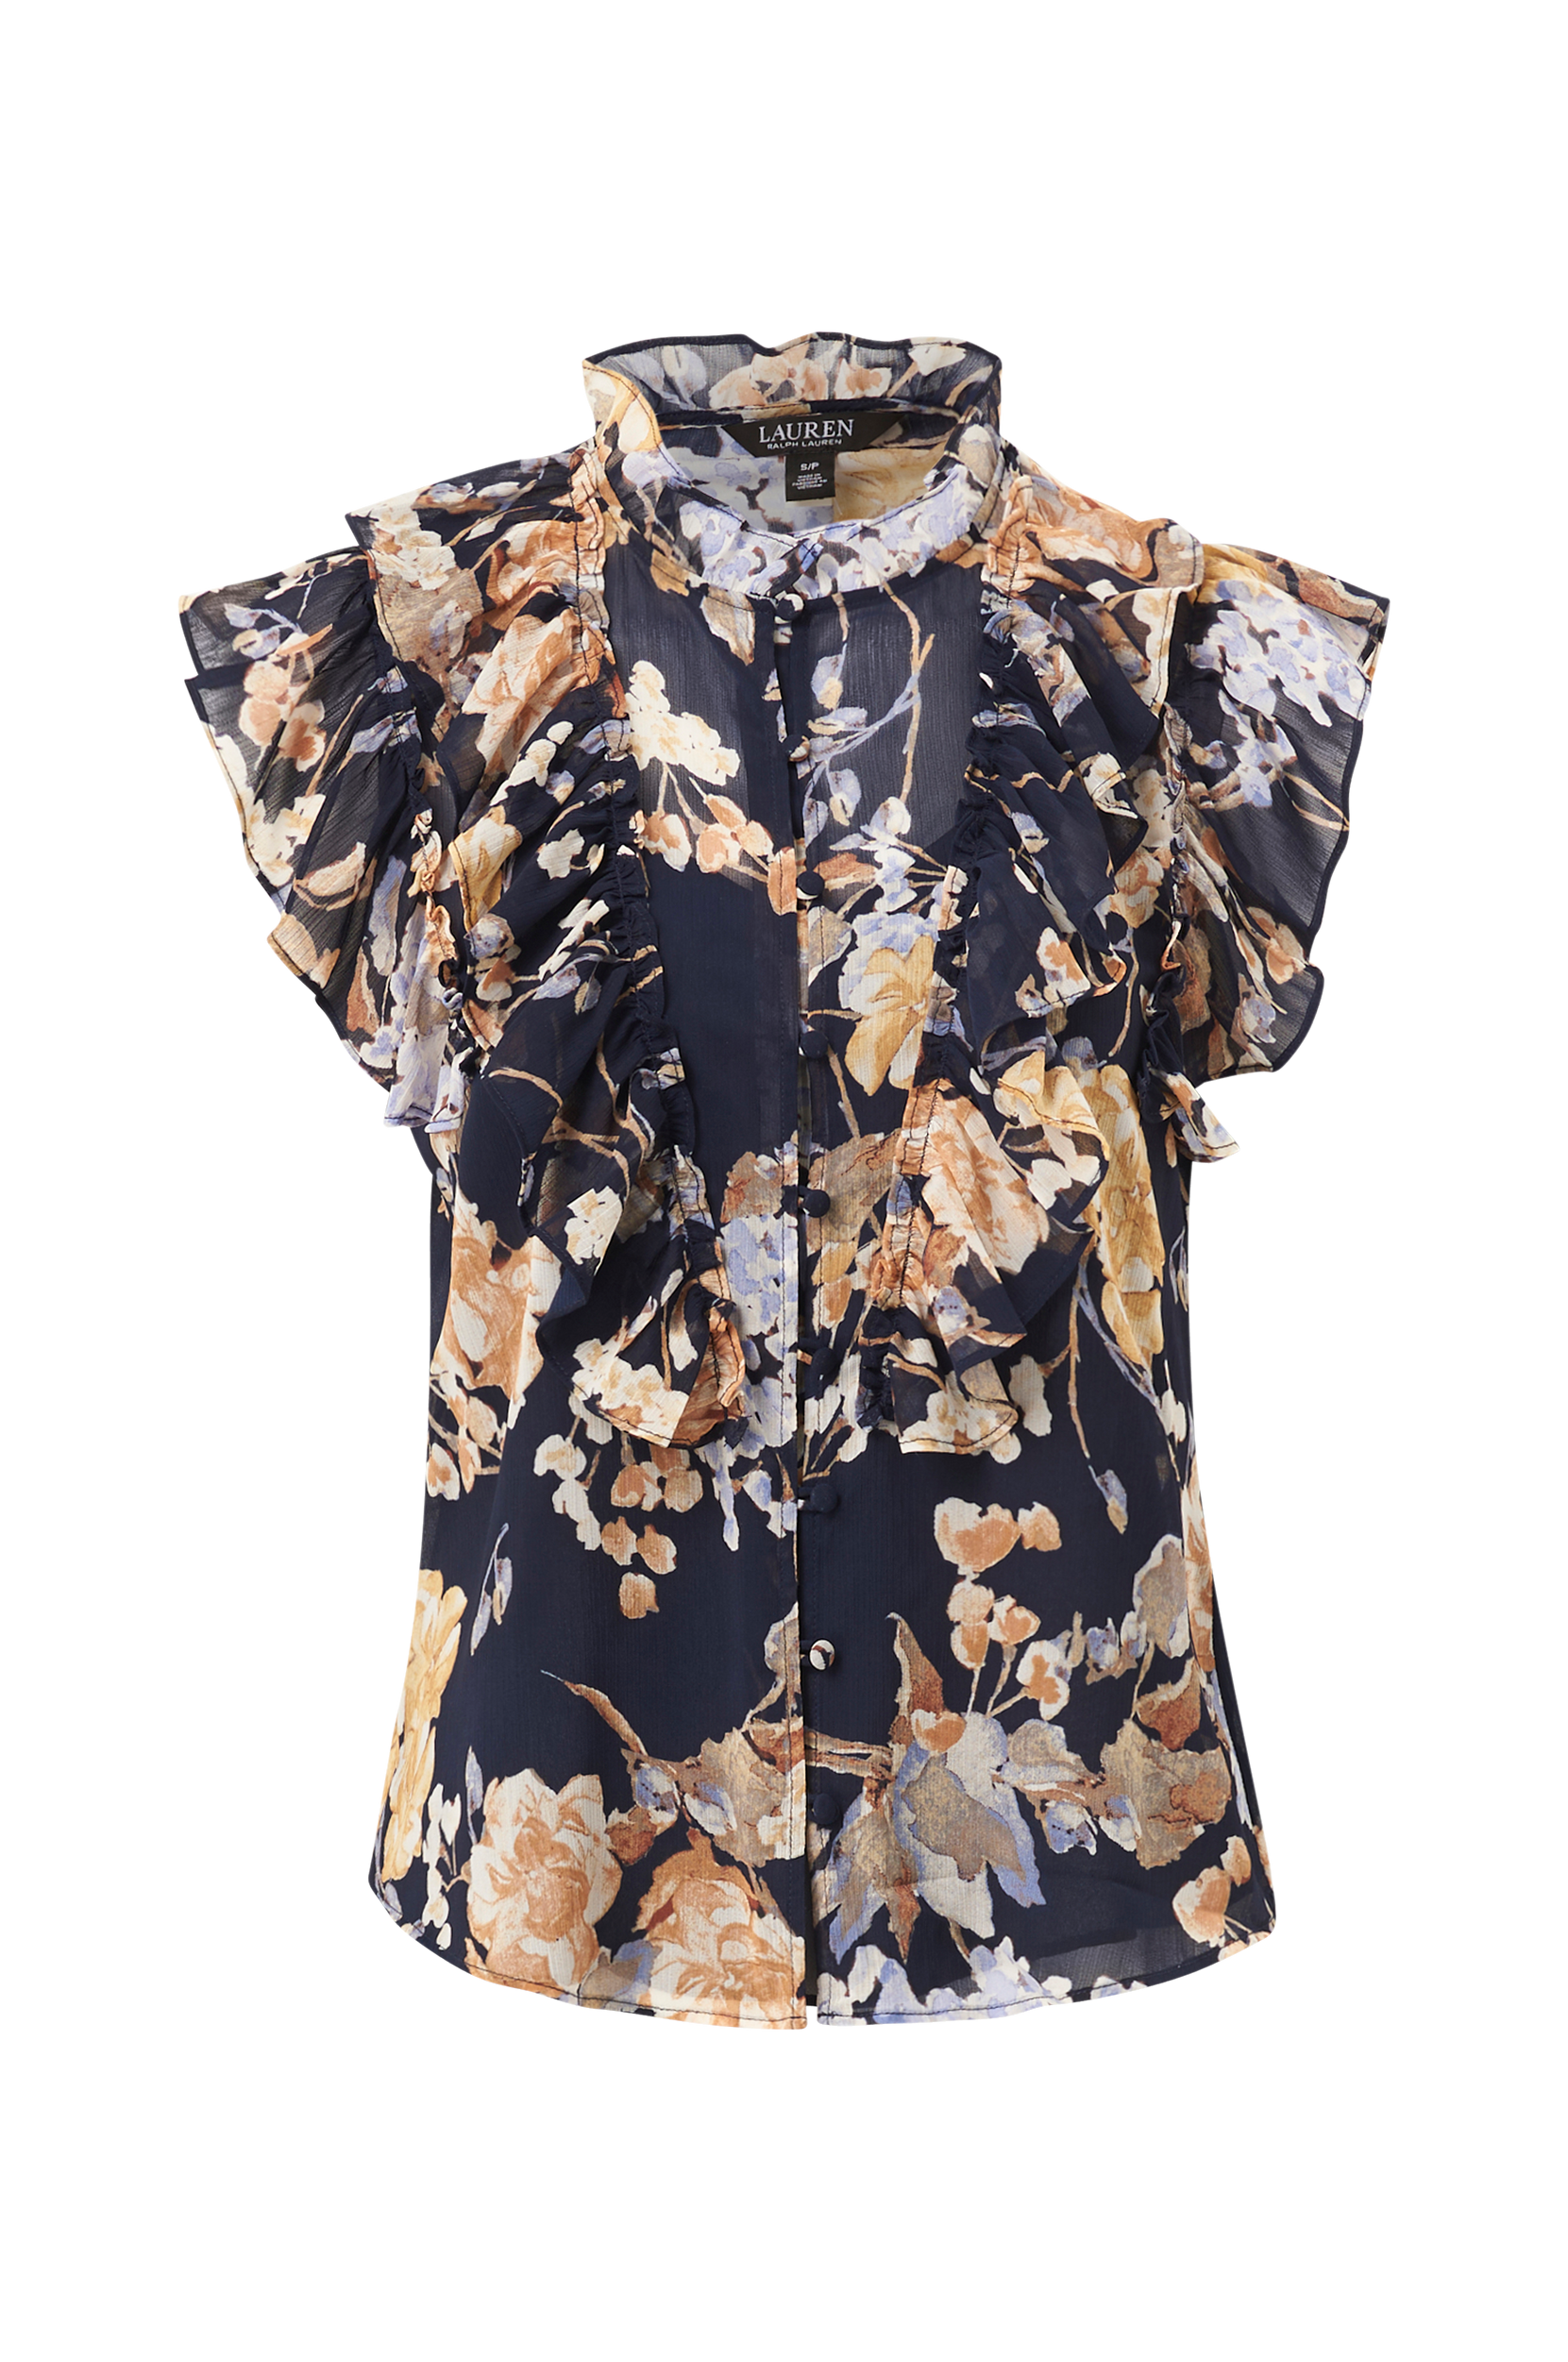 Lauren Ralph Lauren - Bluse Button Front Shirt - Multi - 34/36